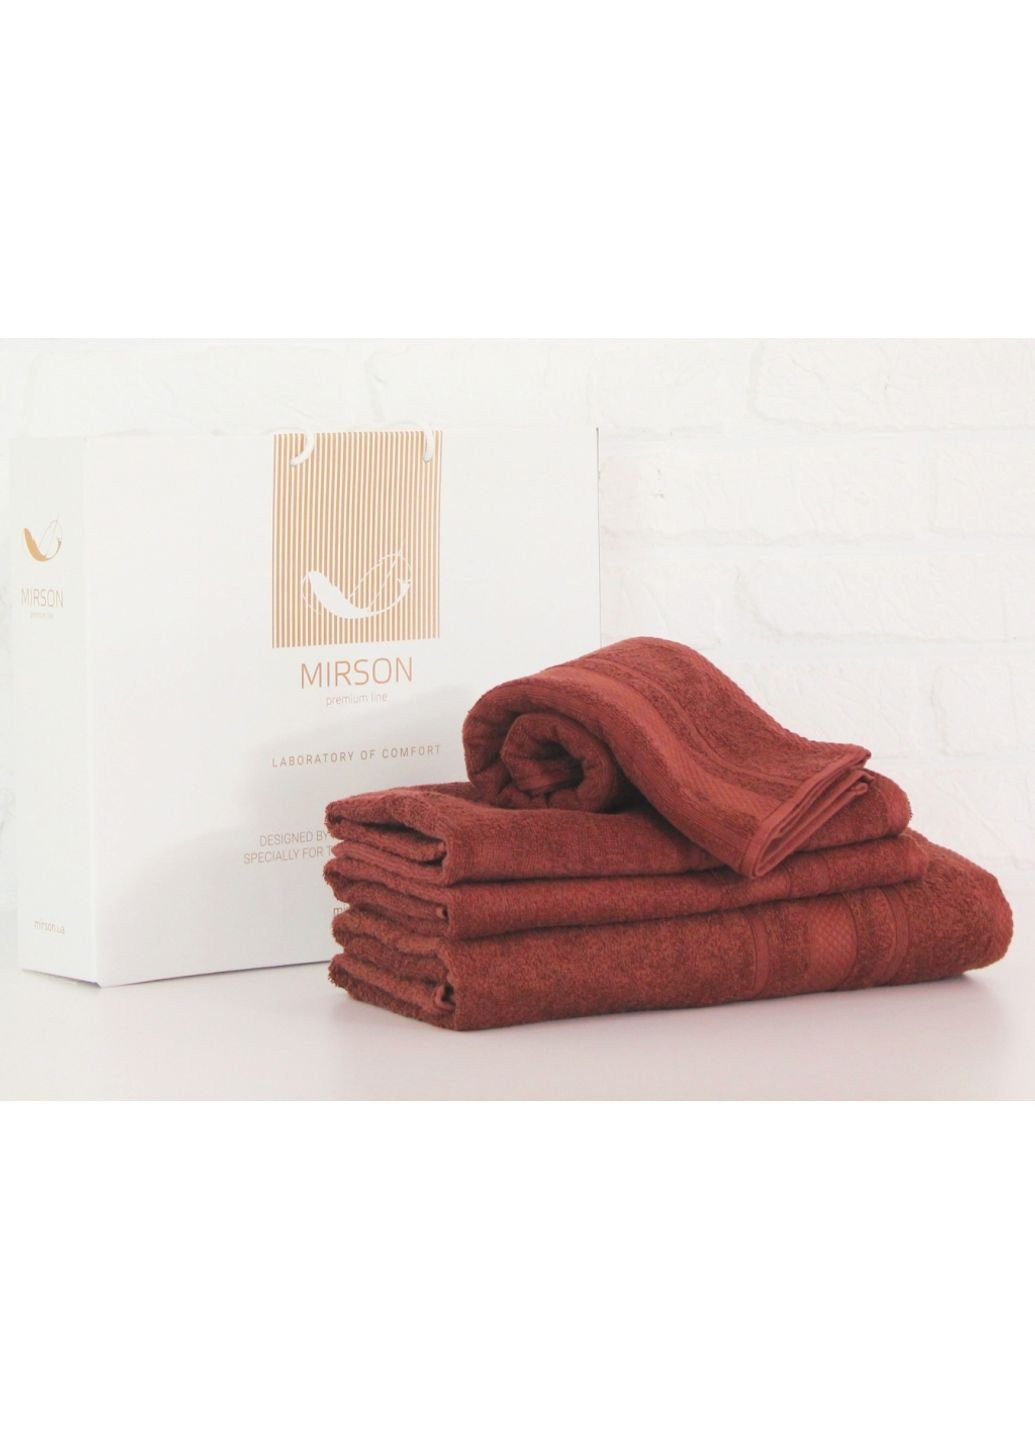 No Brand полотенце mirson набор банный №5071 elite softness brown 40х70, 50х90, 70х140 (2200003975635) коричневый производство - Украина